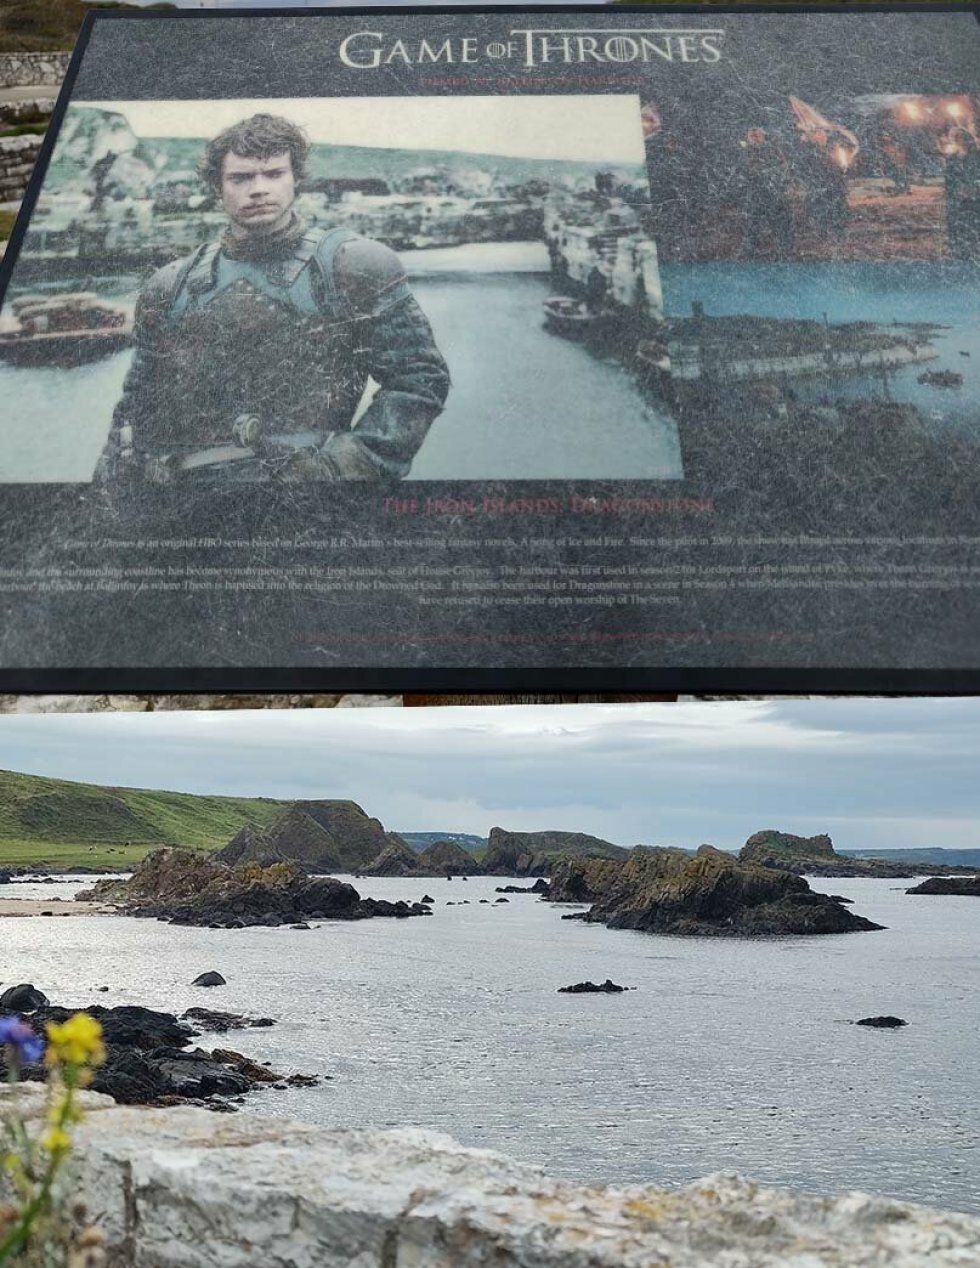 Ballintoy - Rejseguide: Nordirland den ultimative Game of Thrones-destination